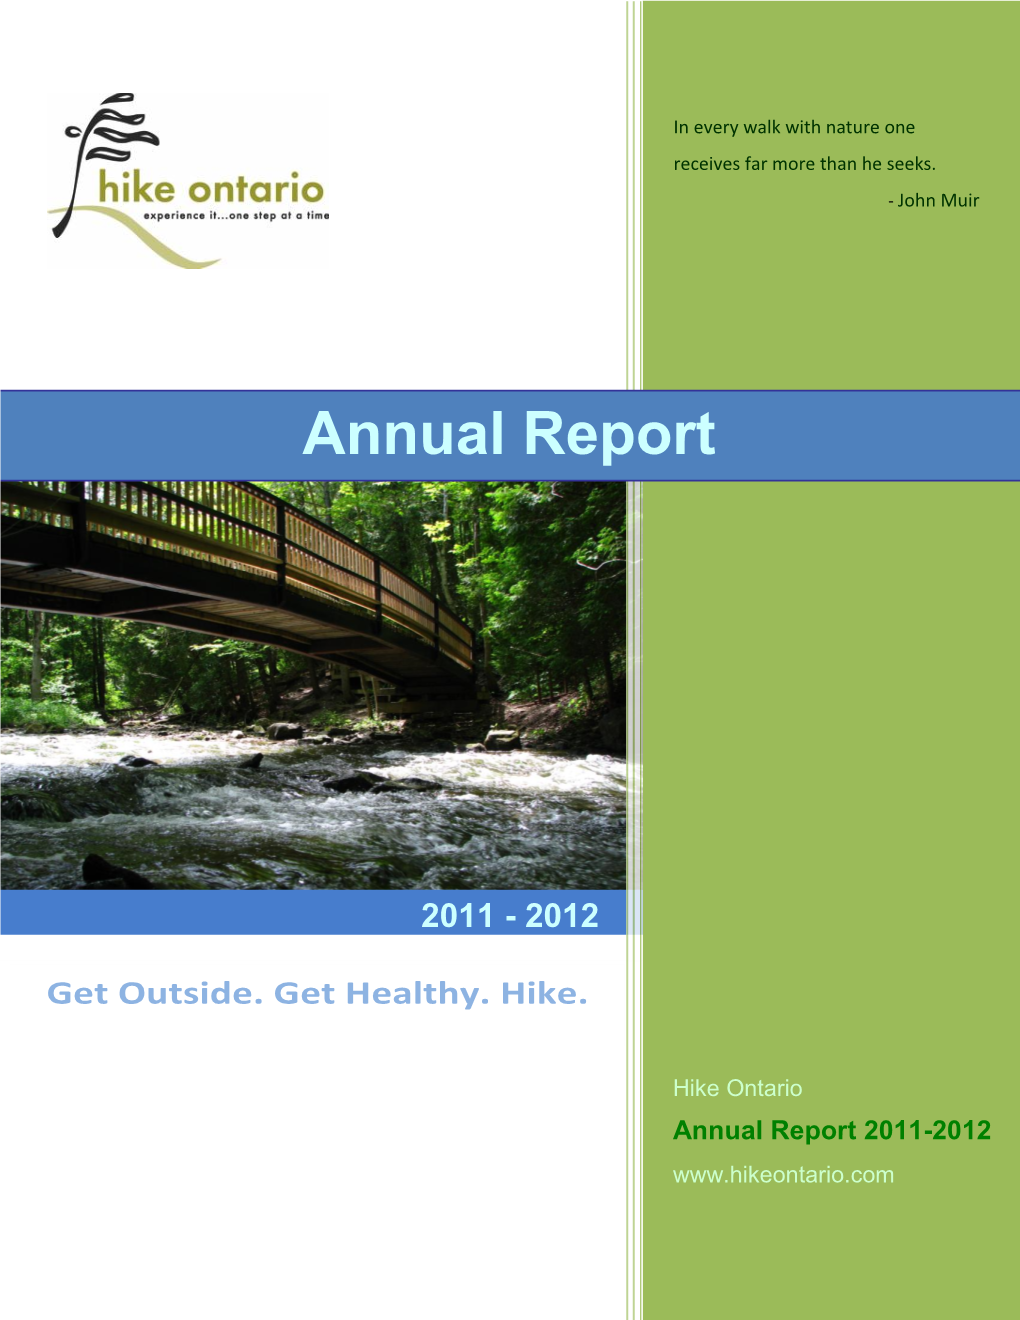 Hike Ontario 2011-2012 Annual Report